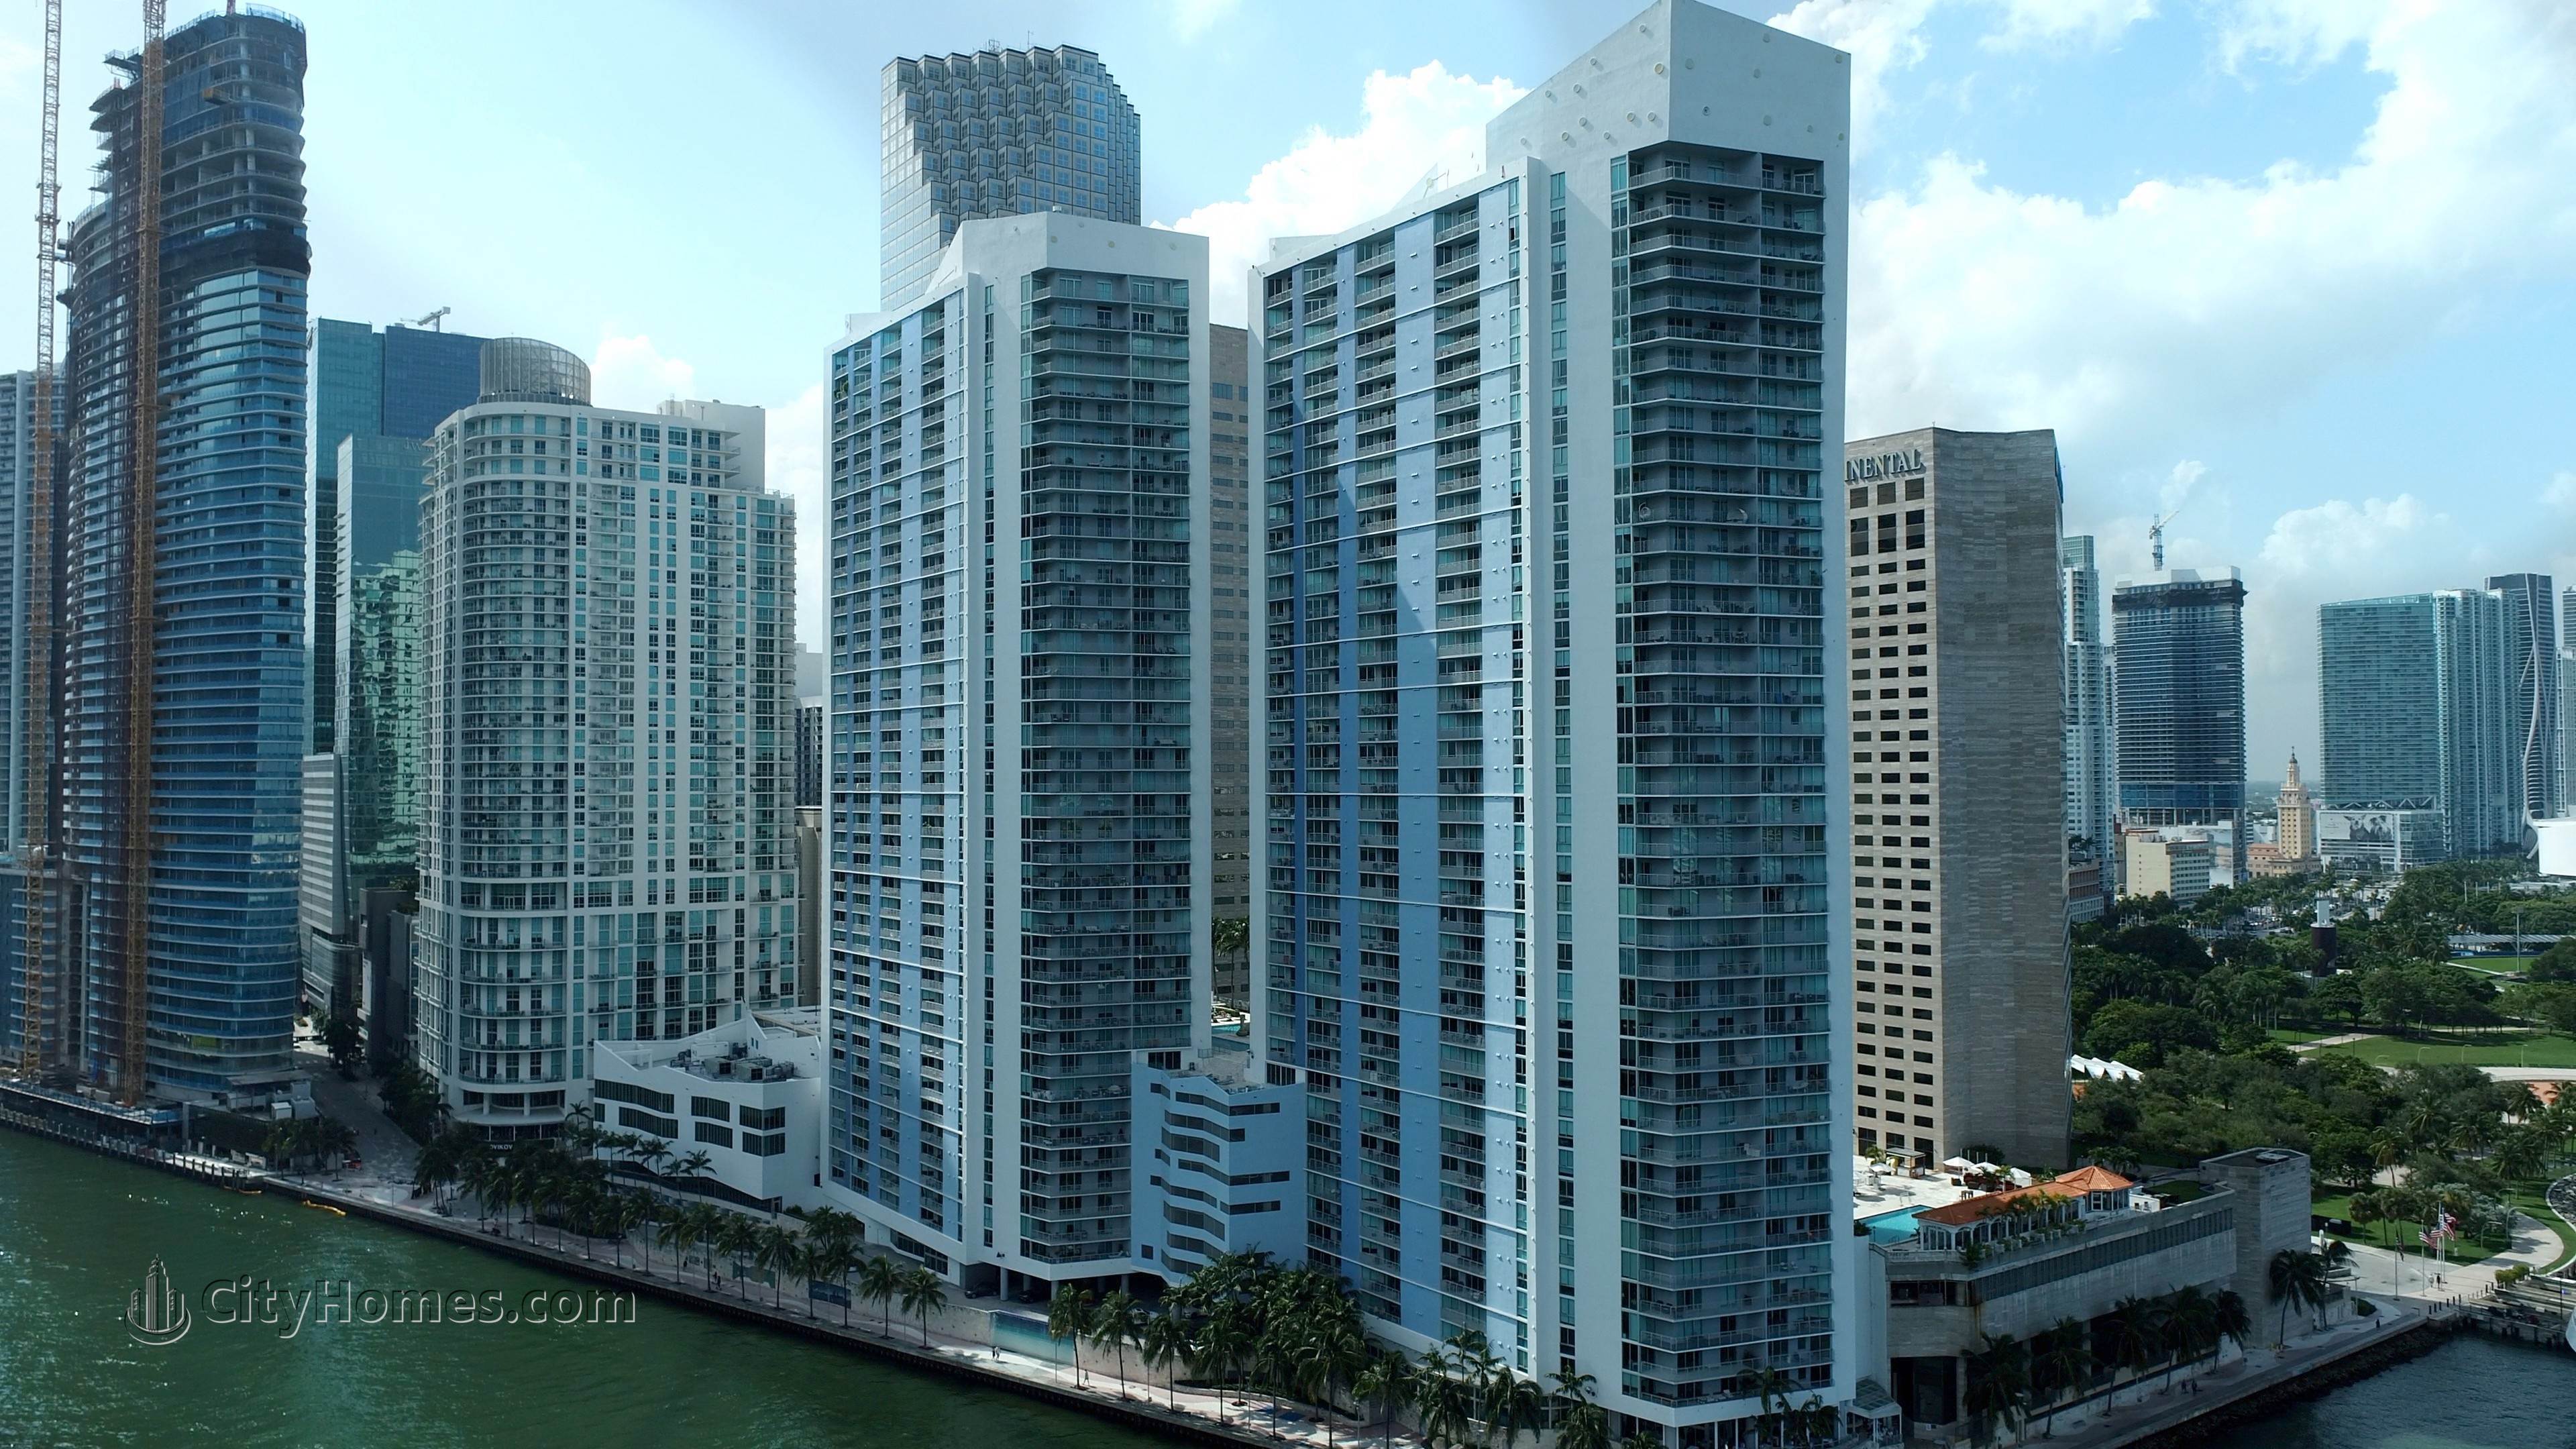 2. One Miami κτίριο σε 325 And 335 S Biscayne Blvd, Miami, FL 33131